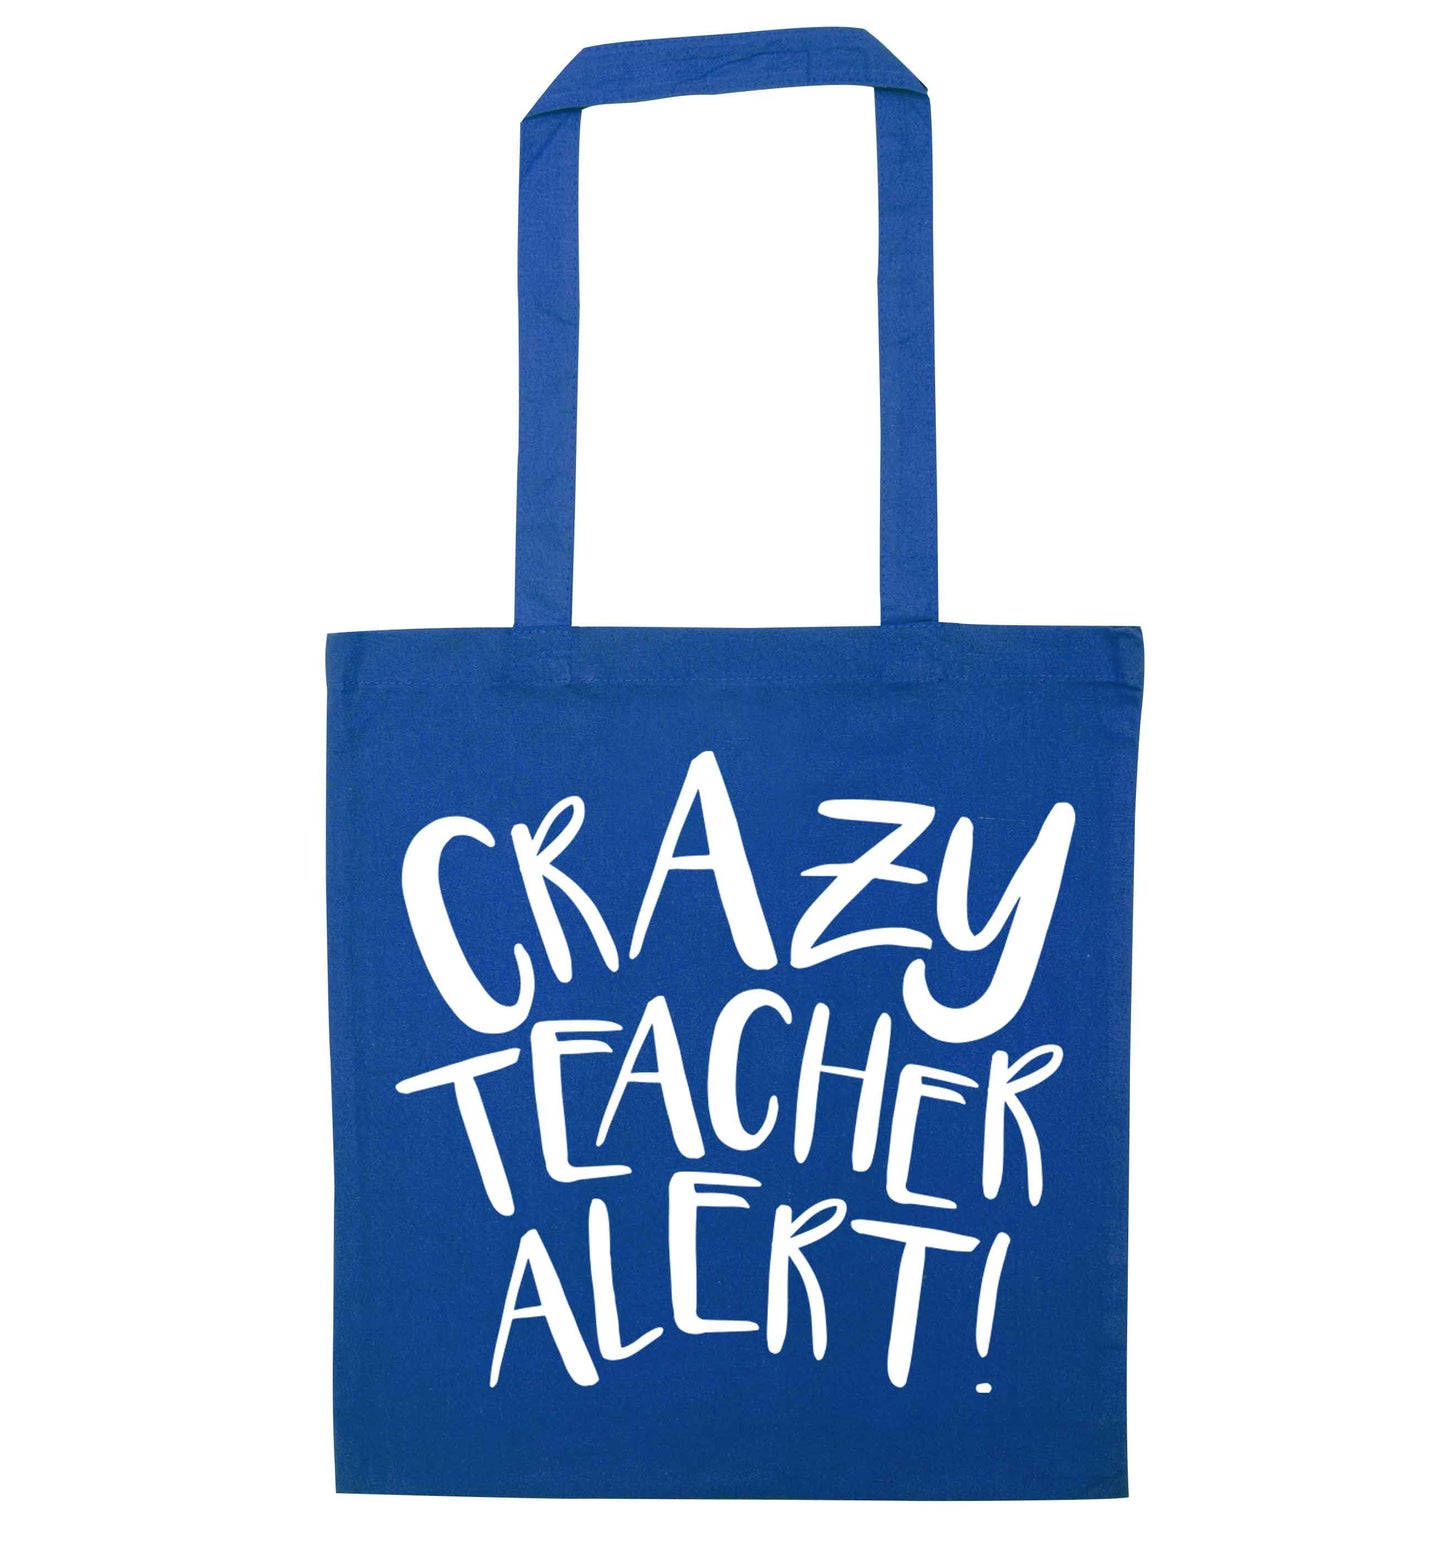 Crazy teacher alert blue tote bag